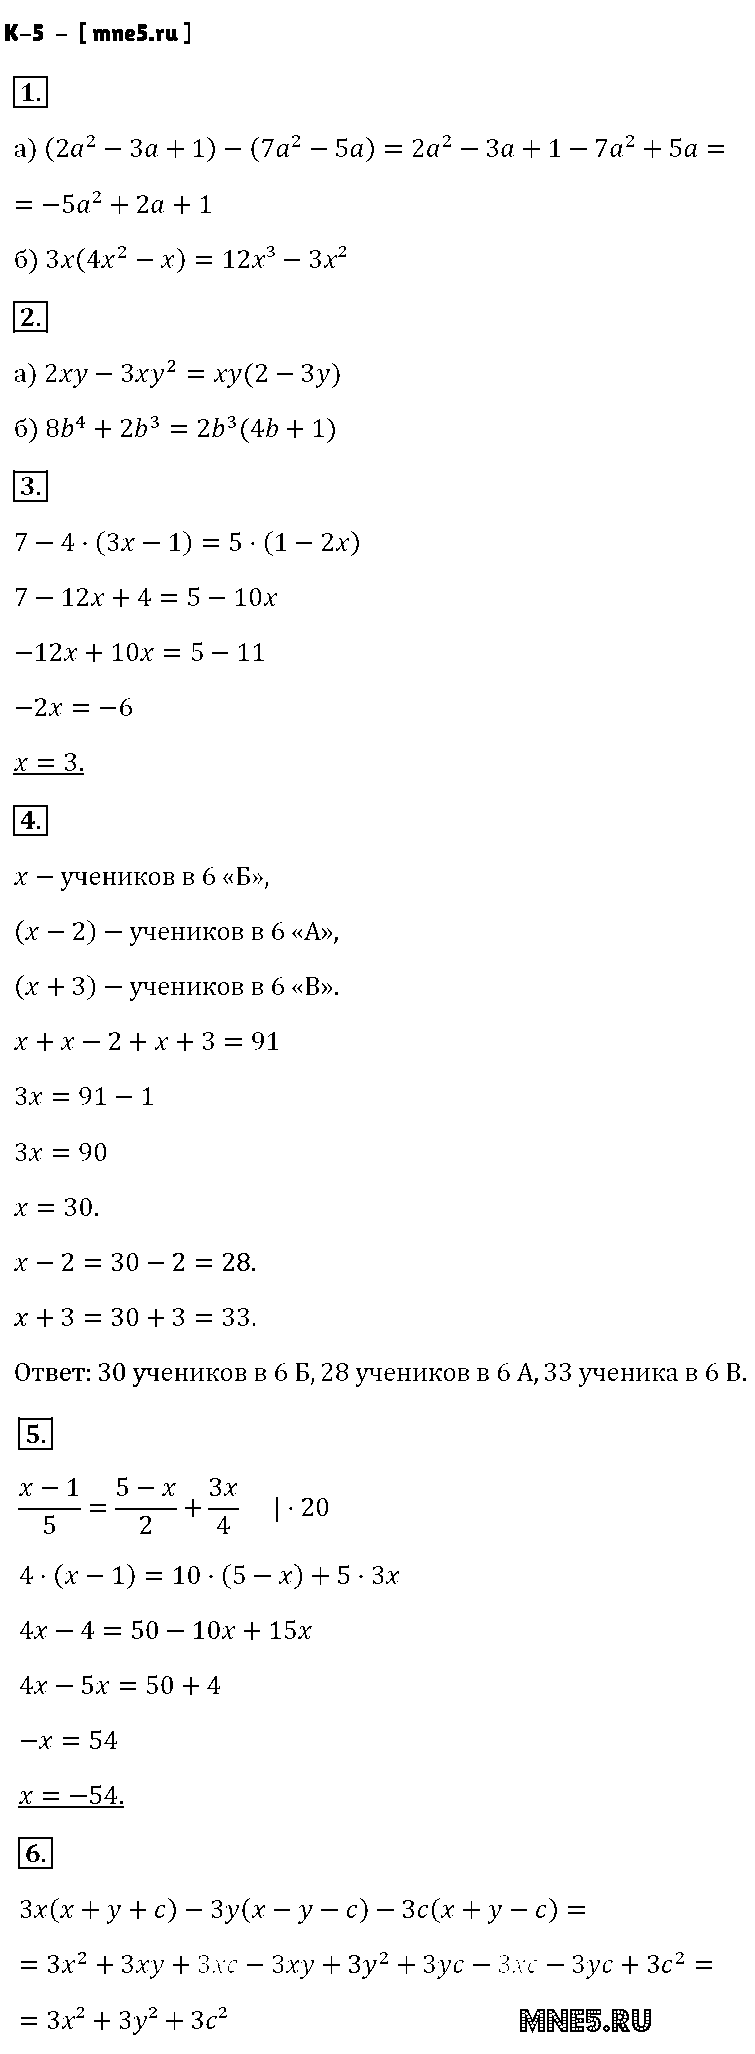 ГДЗ Алгебра 7 класс - К-5